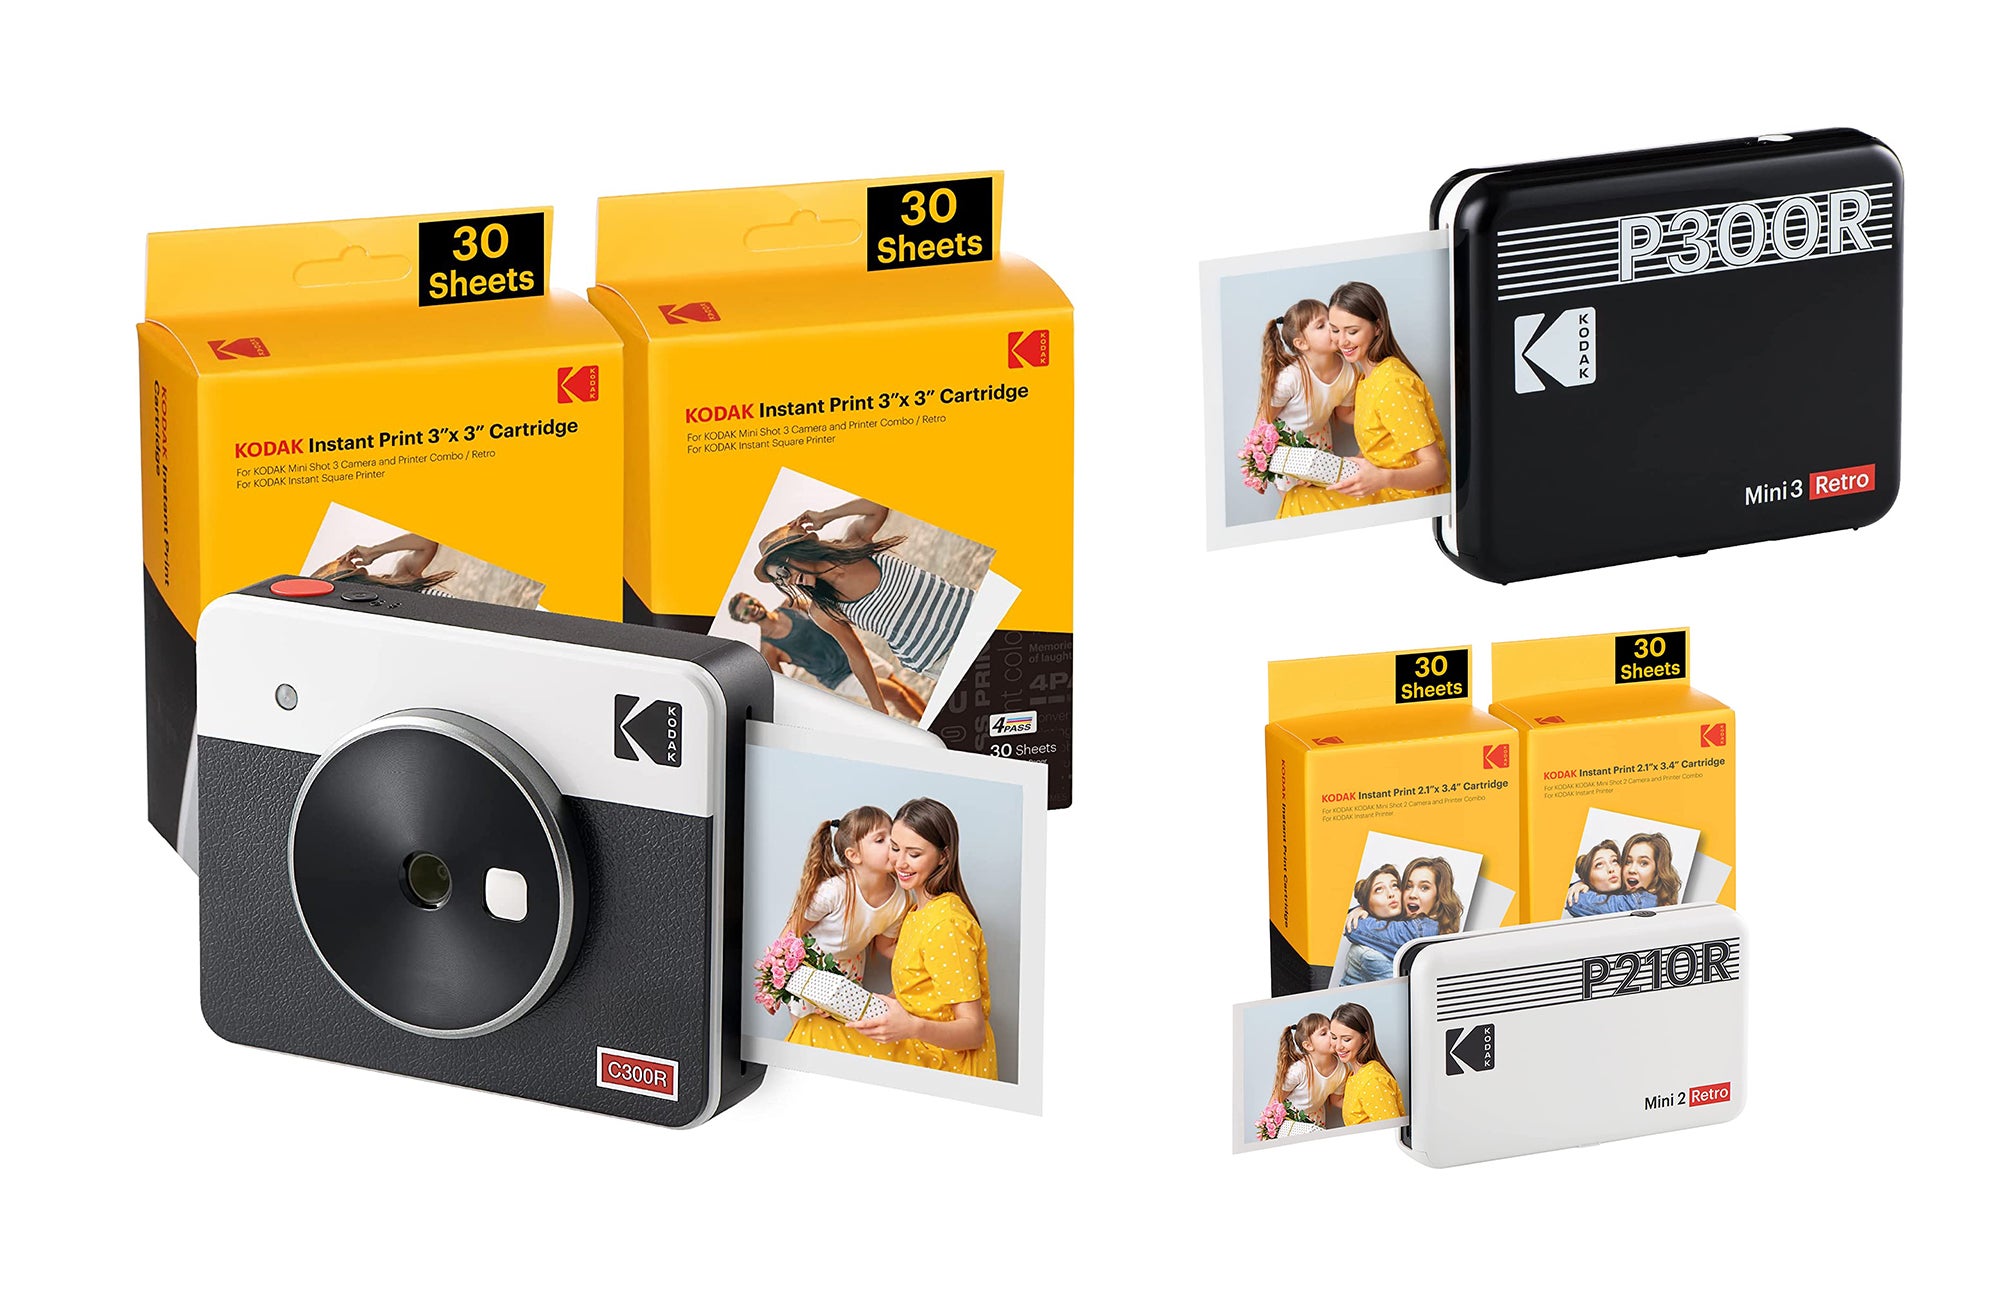 KODAK Instant Print 3x 3 Cartridge 30 Sheets For Mini Shot 3  Camera/Printer